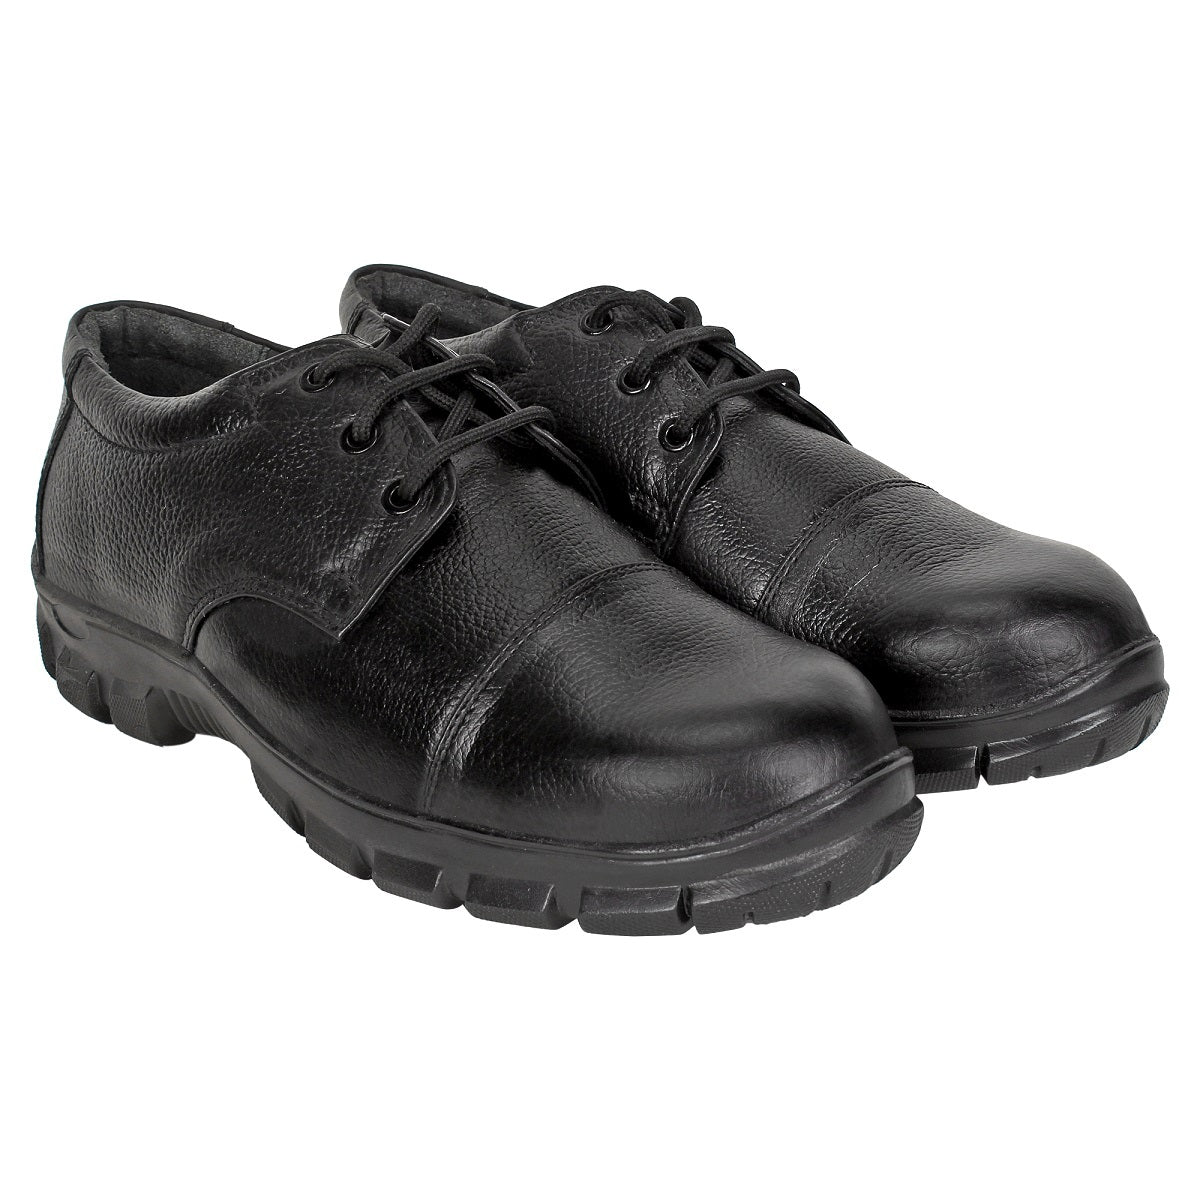 Bata Industrials Bickz 902 9UK Work Safety Boots Lace up Composite Toe Cap  8712843550896 | eBay